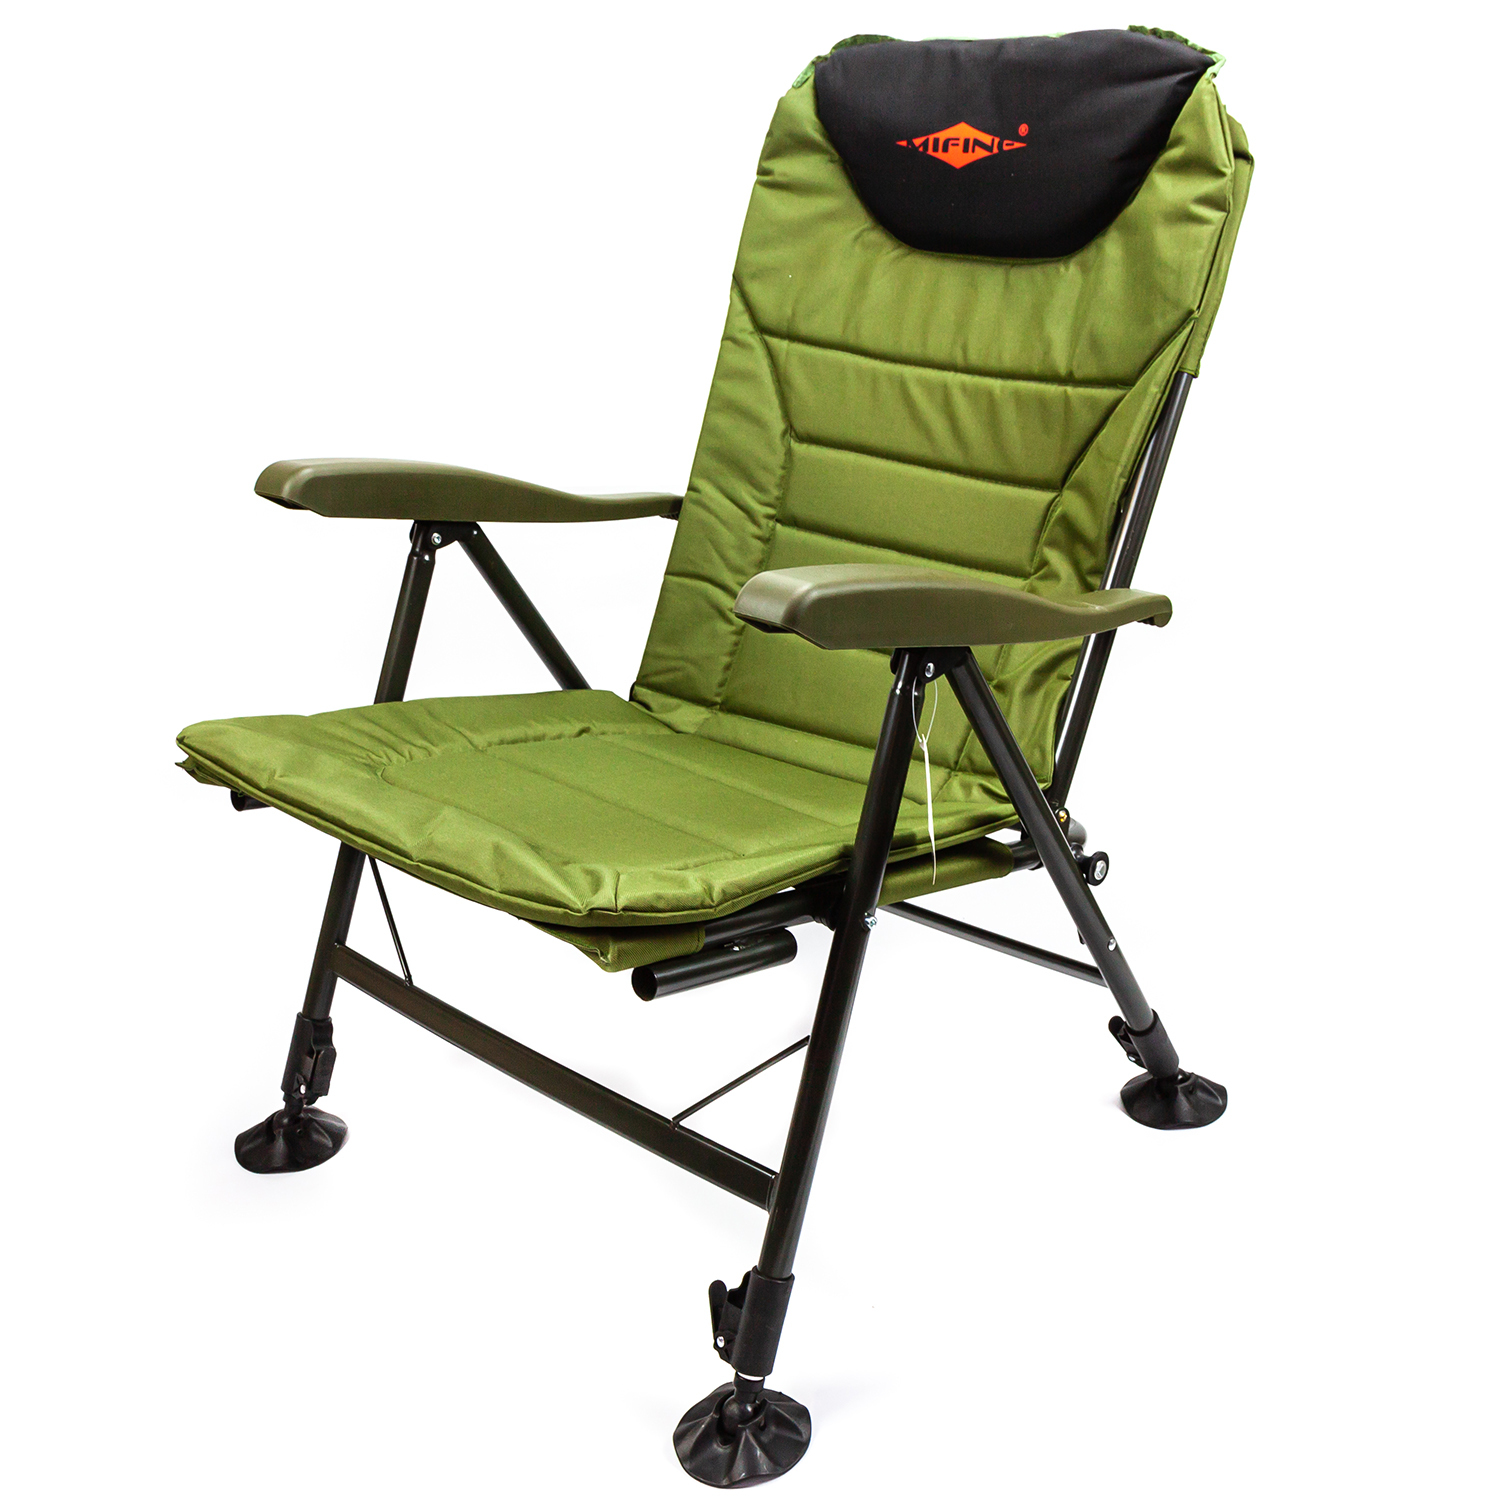 Кресло складное Mifine 55071 green/black